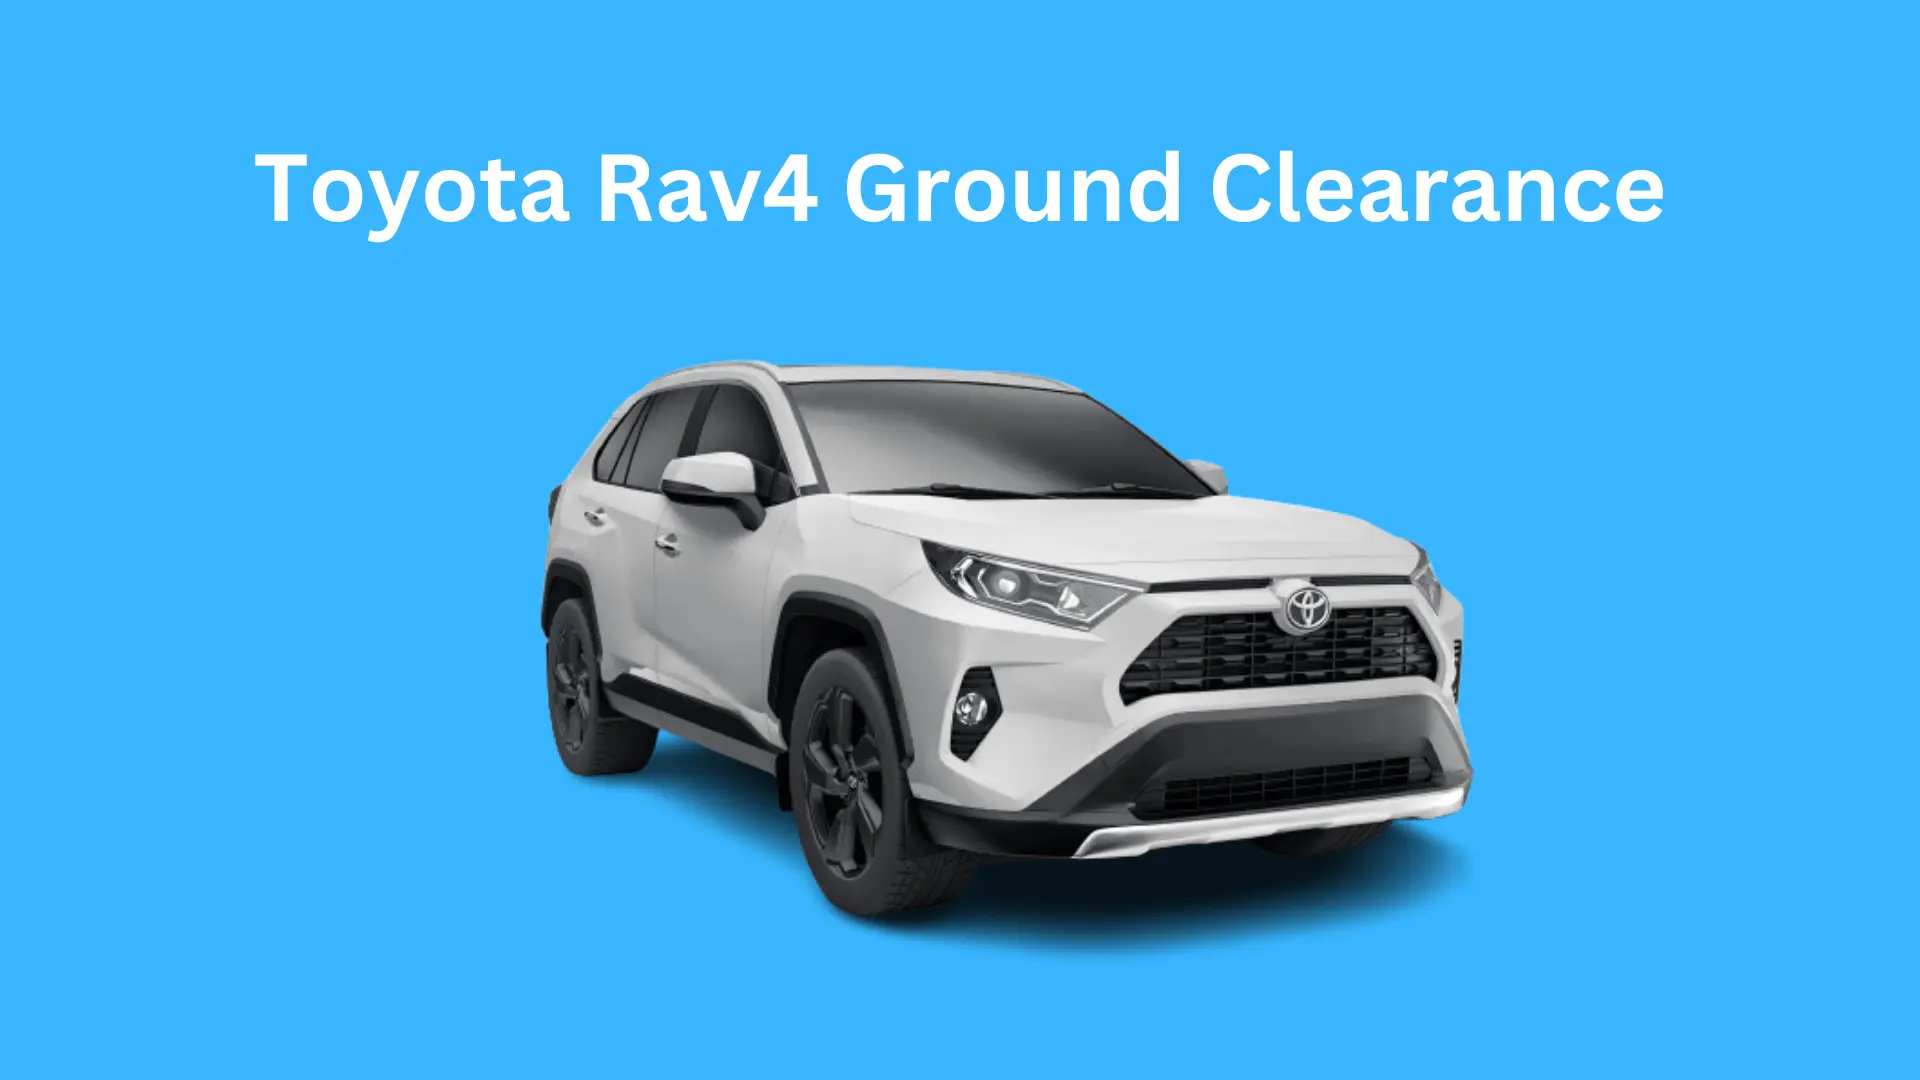 Toyota Rav4 Ground Clearance ( All Models)